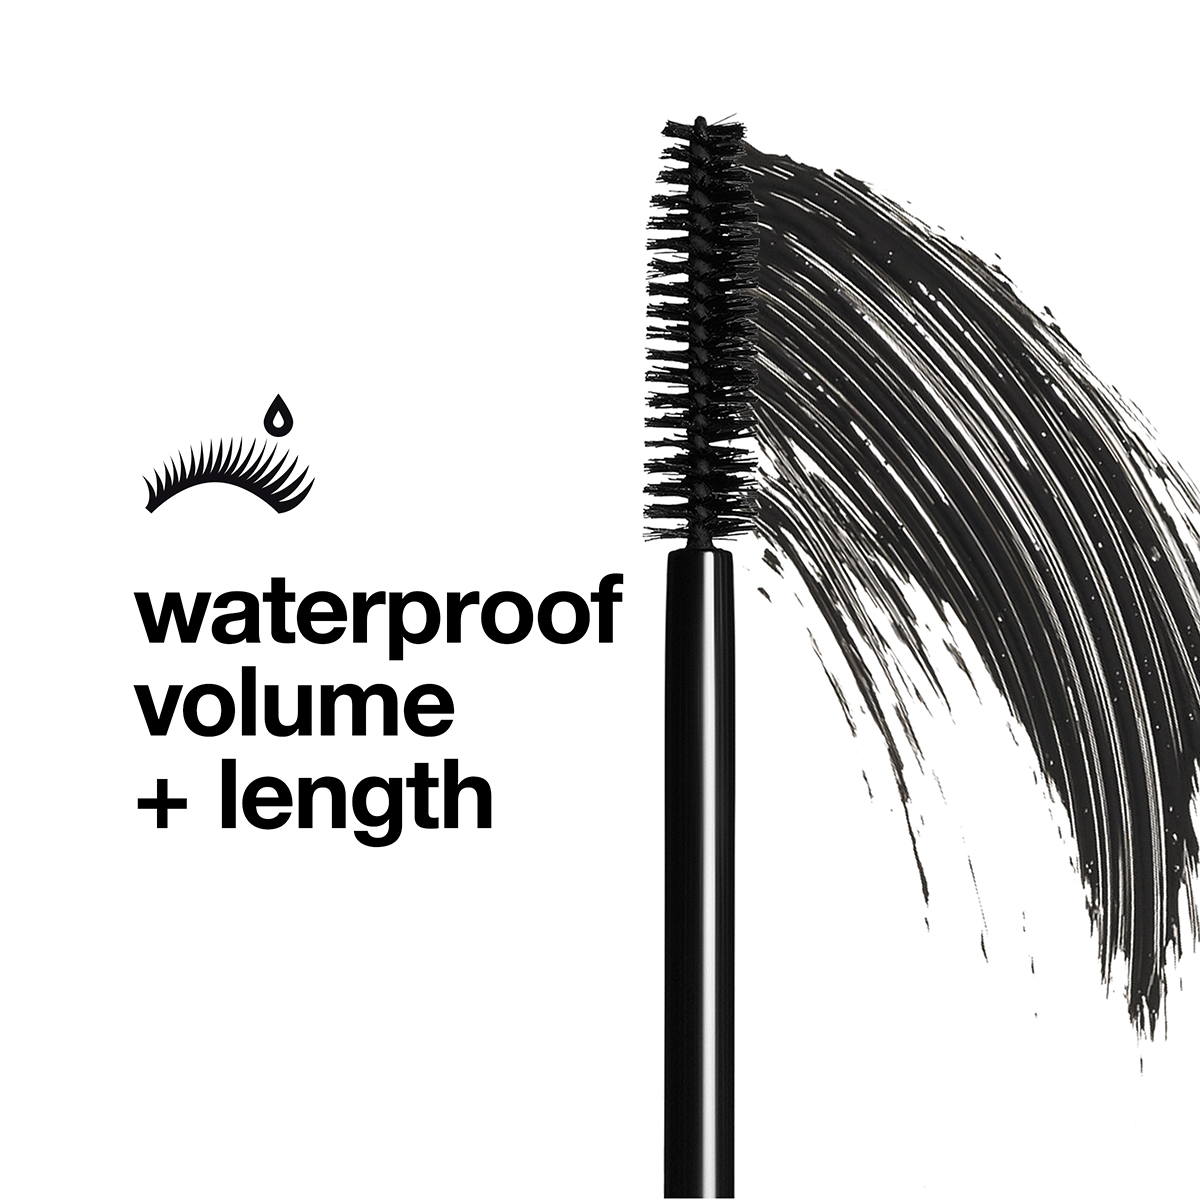 Clinique High Impact(tm) Waterproof Mascara